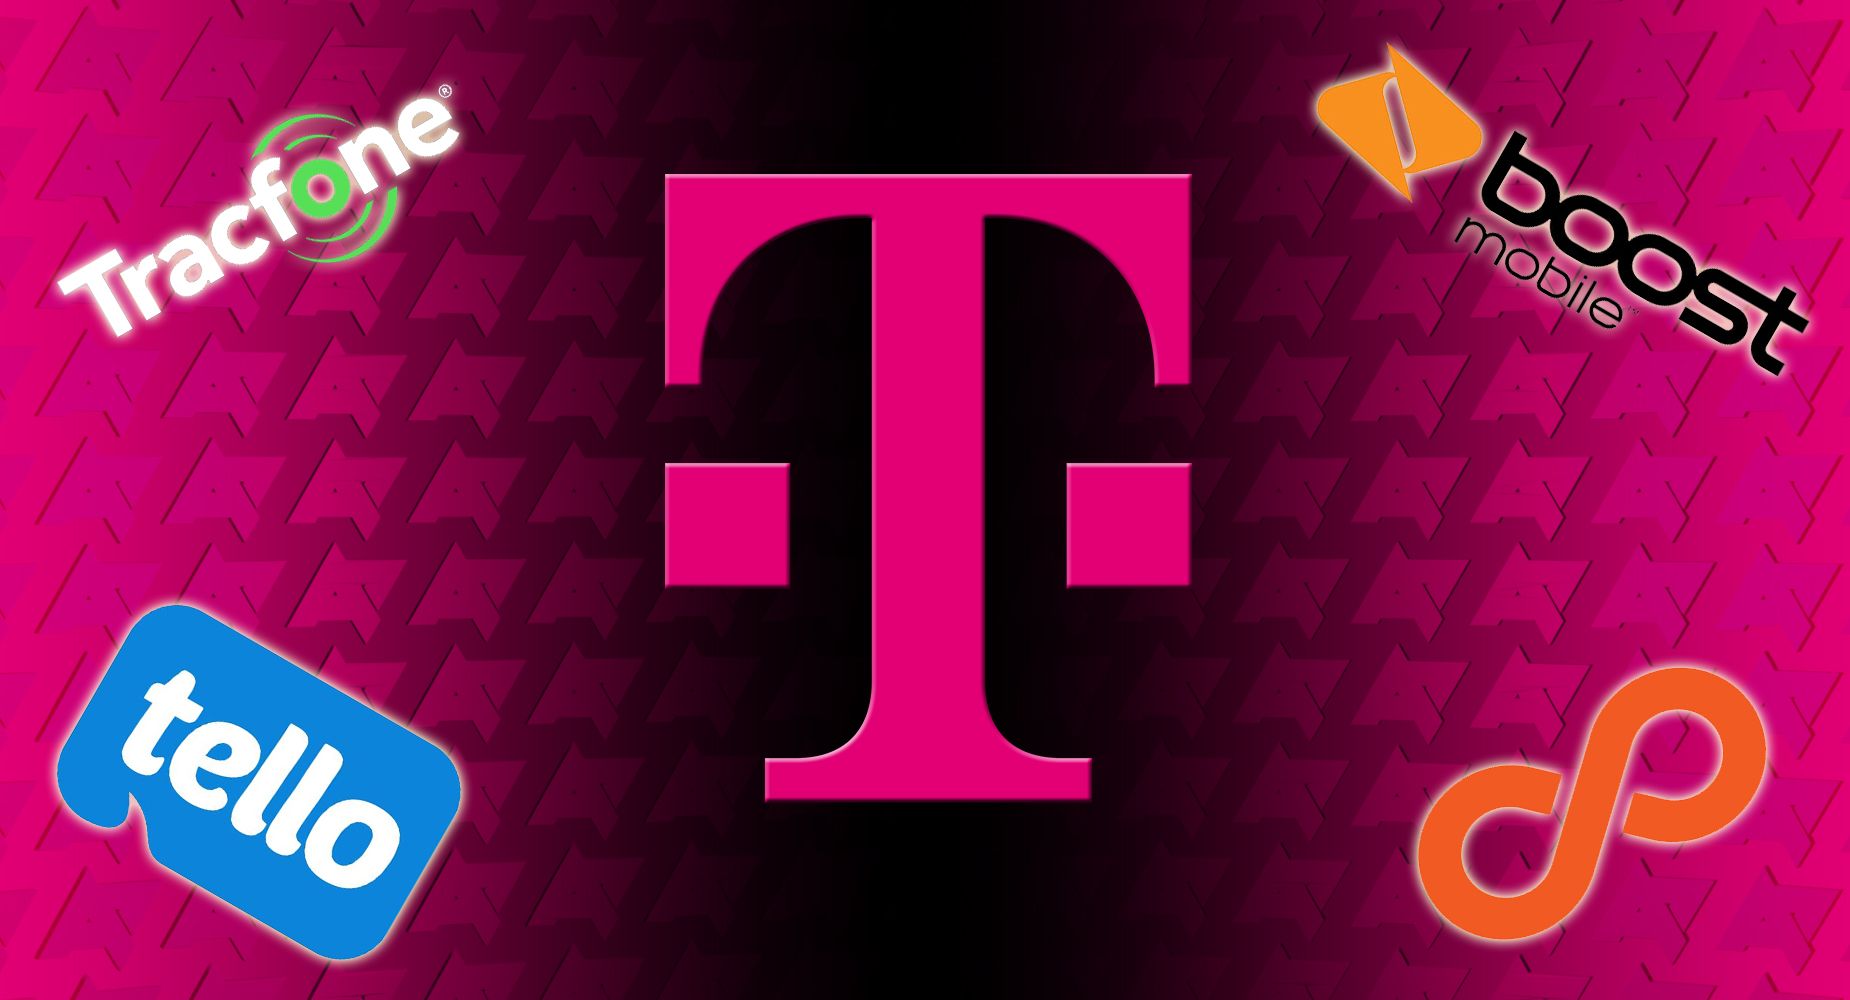 Logotipo da T-Mobile cercado pelos logotipos Tracfone, Boost Mobile, Boos Infinite e Tello, sobre um campo de logotipos AP